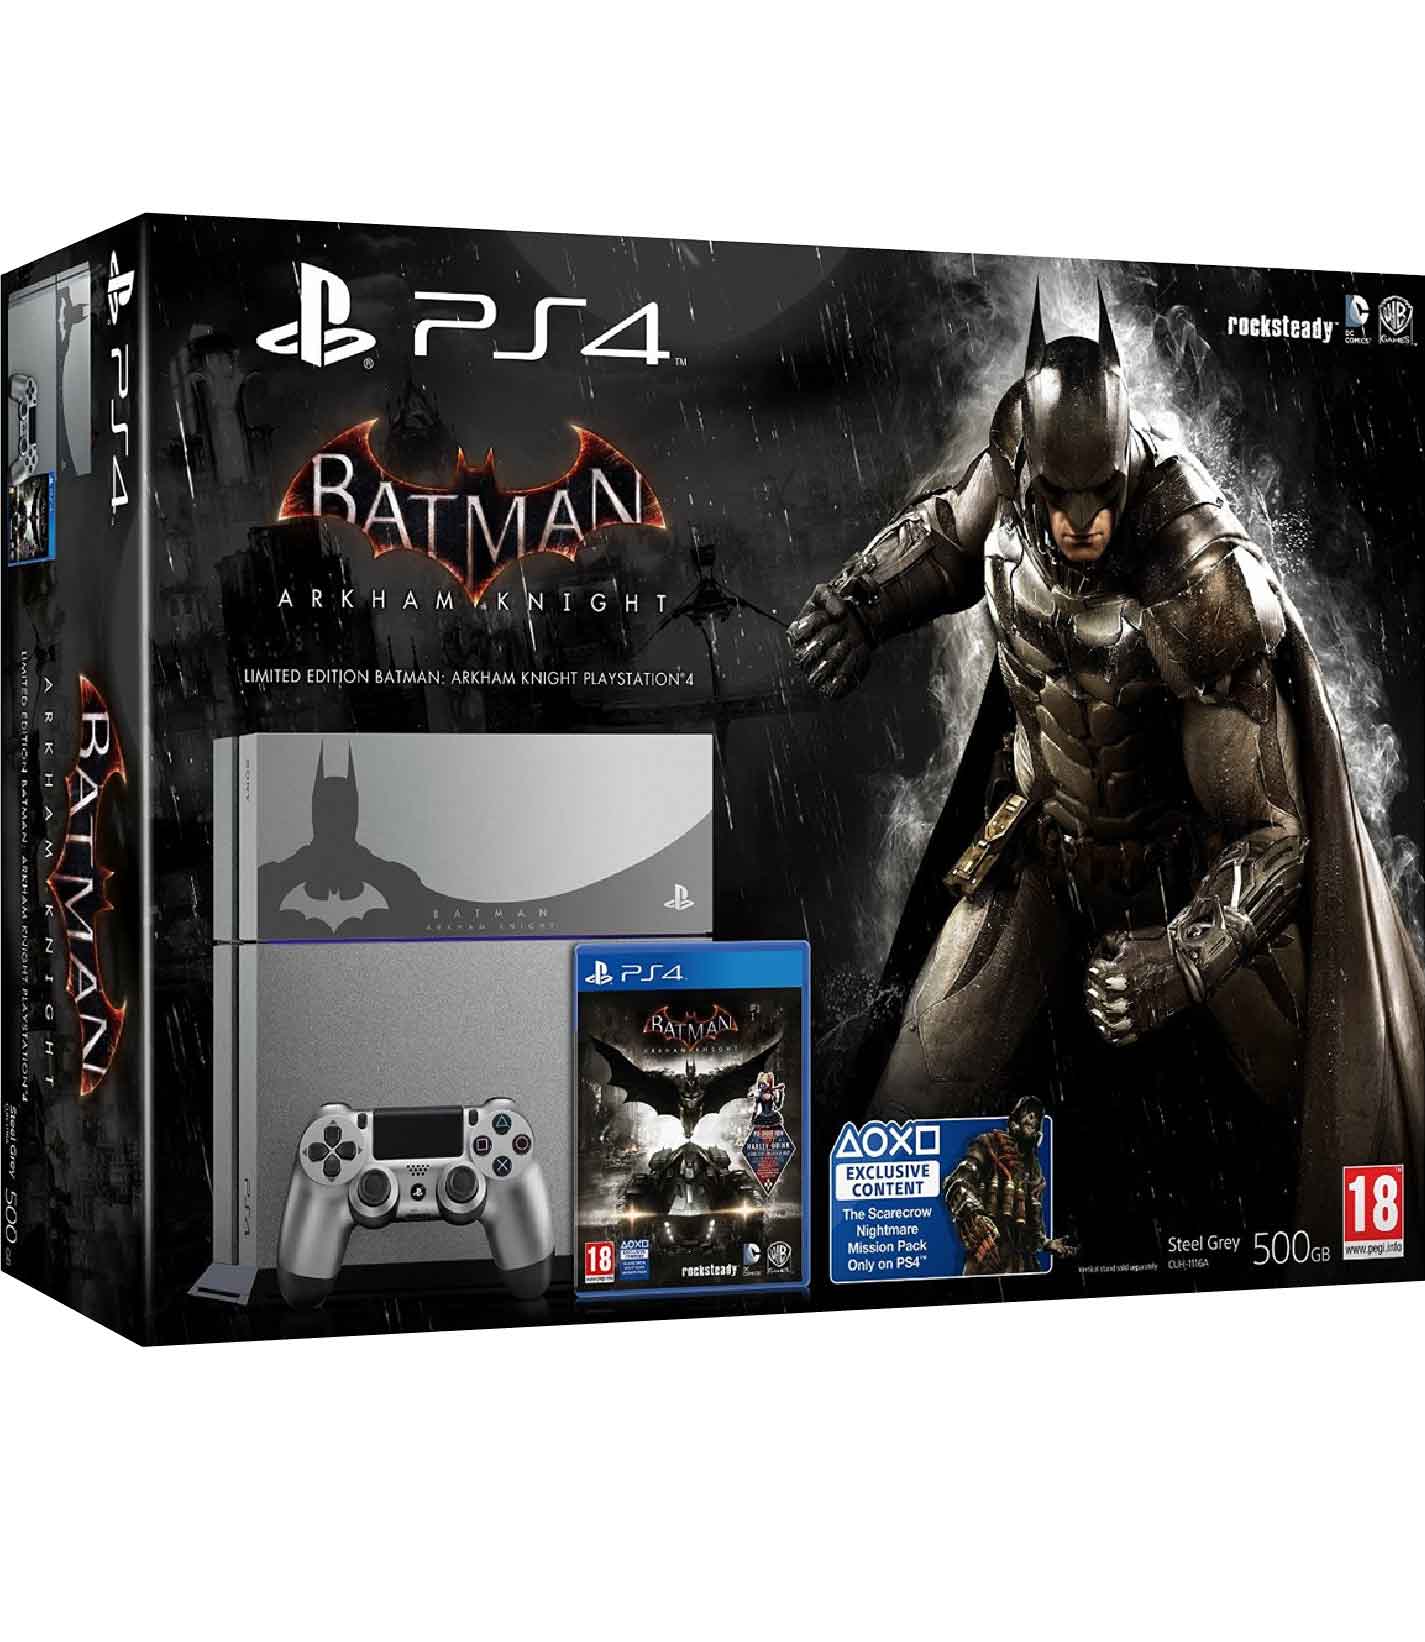 Batman Arkham Knight (PS4 / Playstation 4) Be the Batman , batman